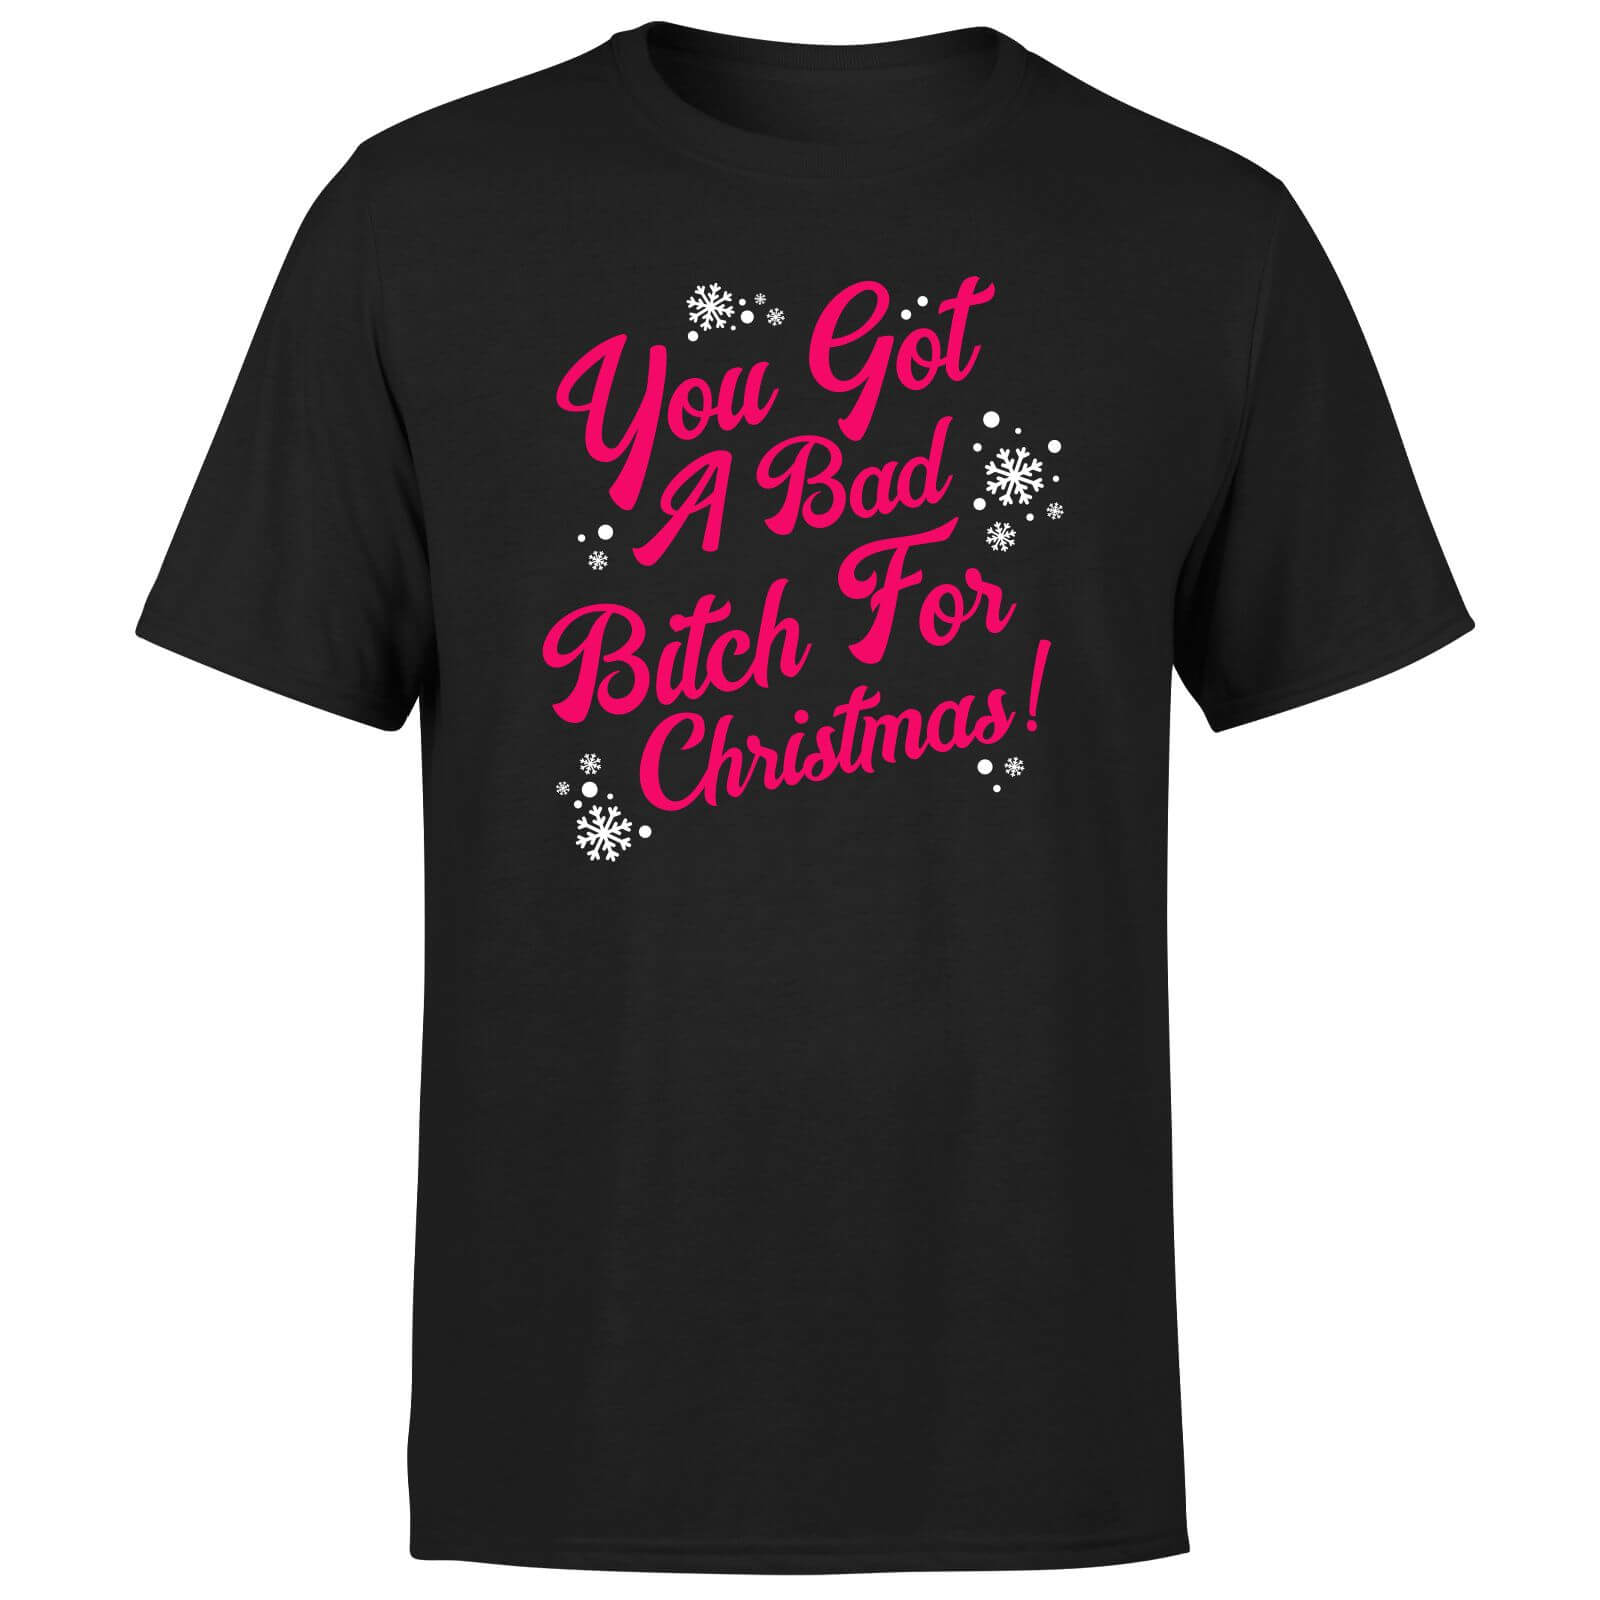 You Got A Bad Bitch For Christmas Men's T-Shirt - Black - XS - Black